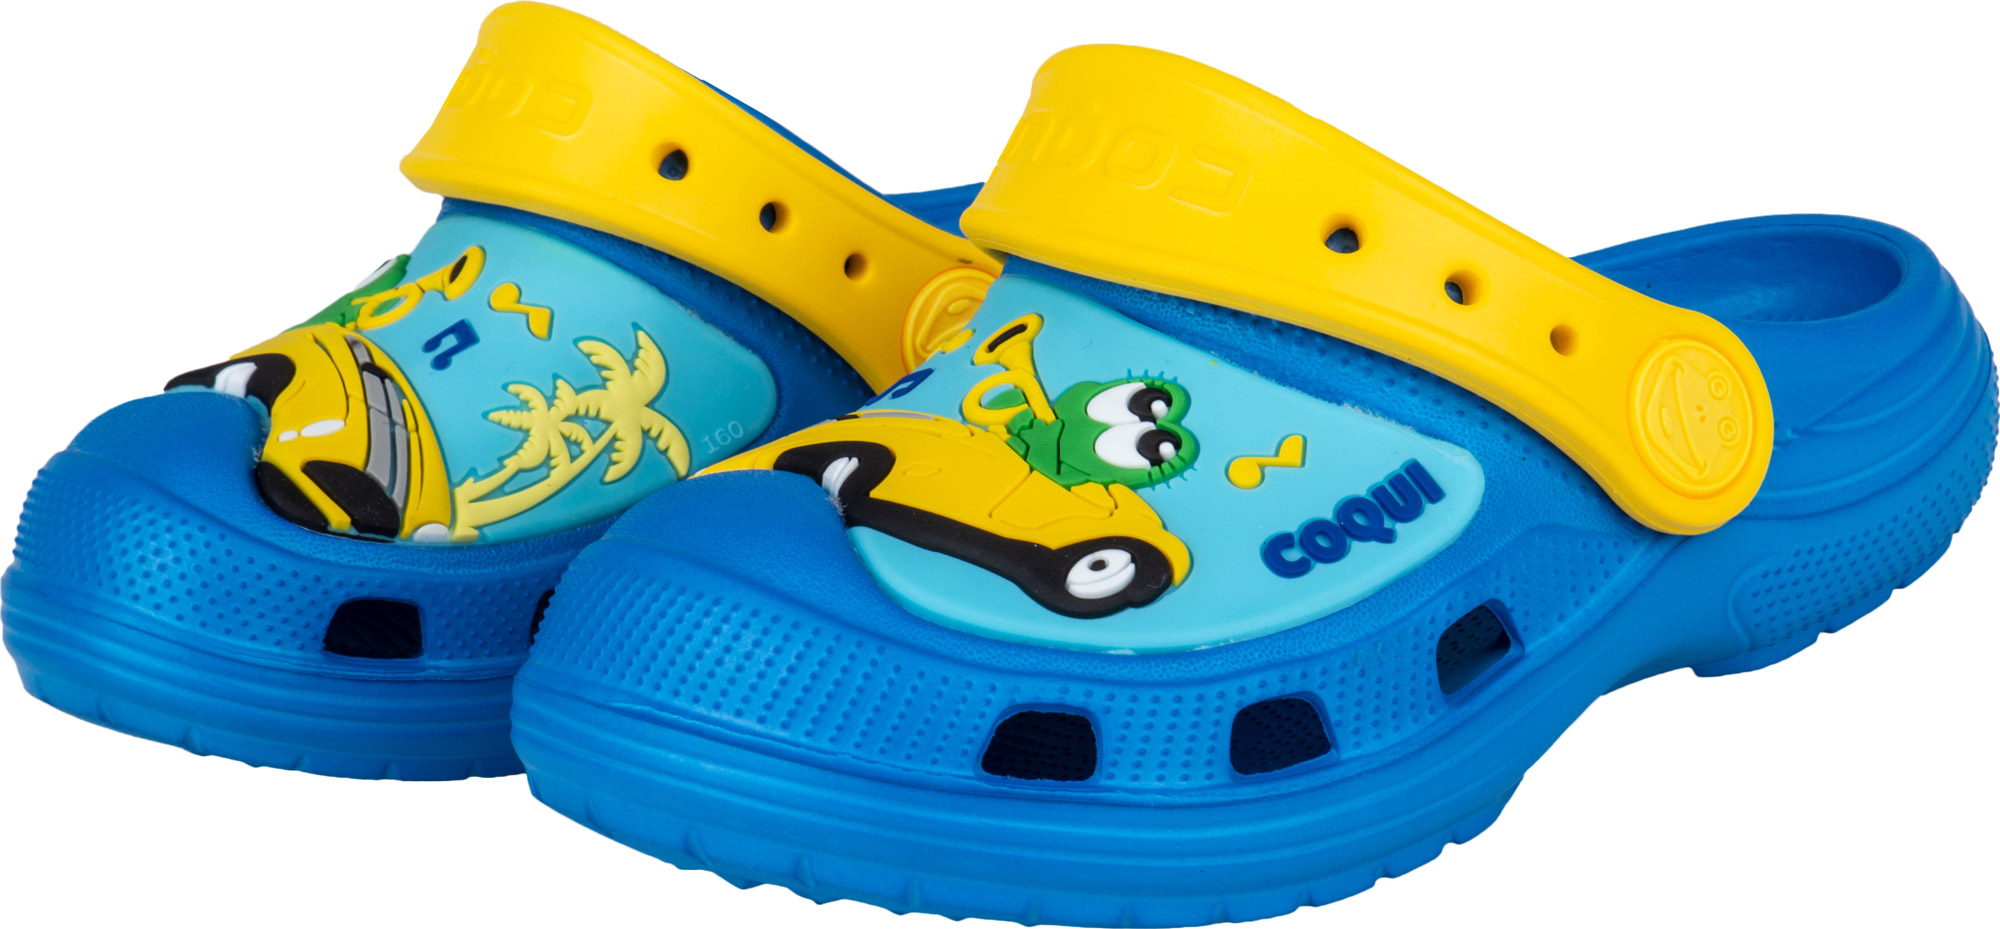 Kids' sandals